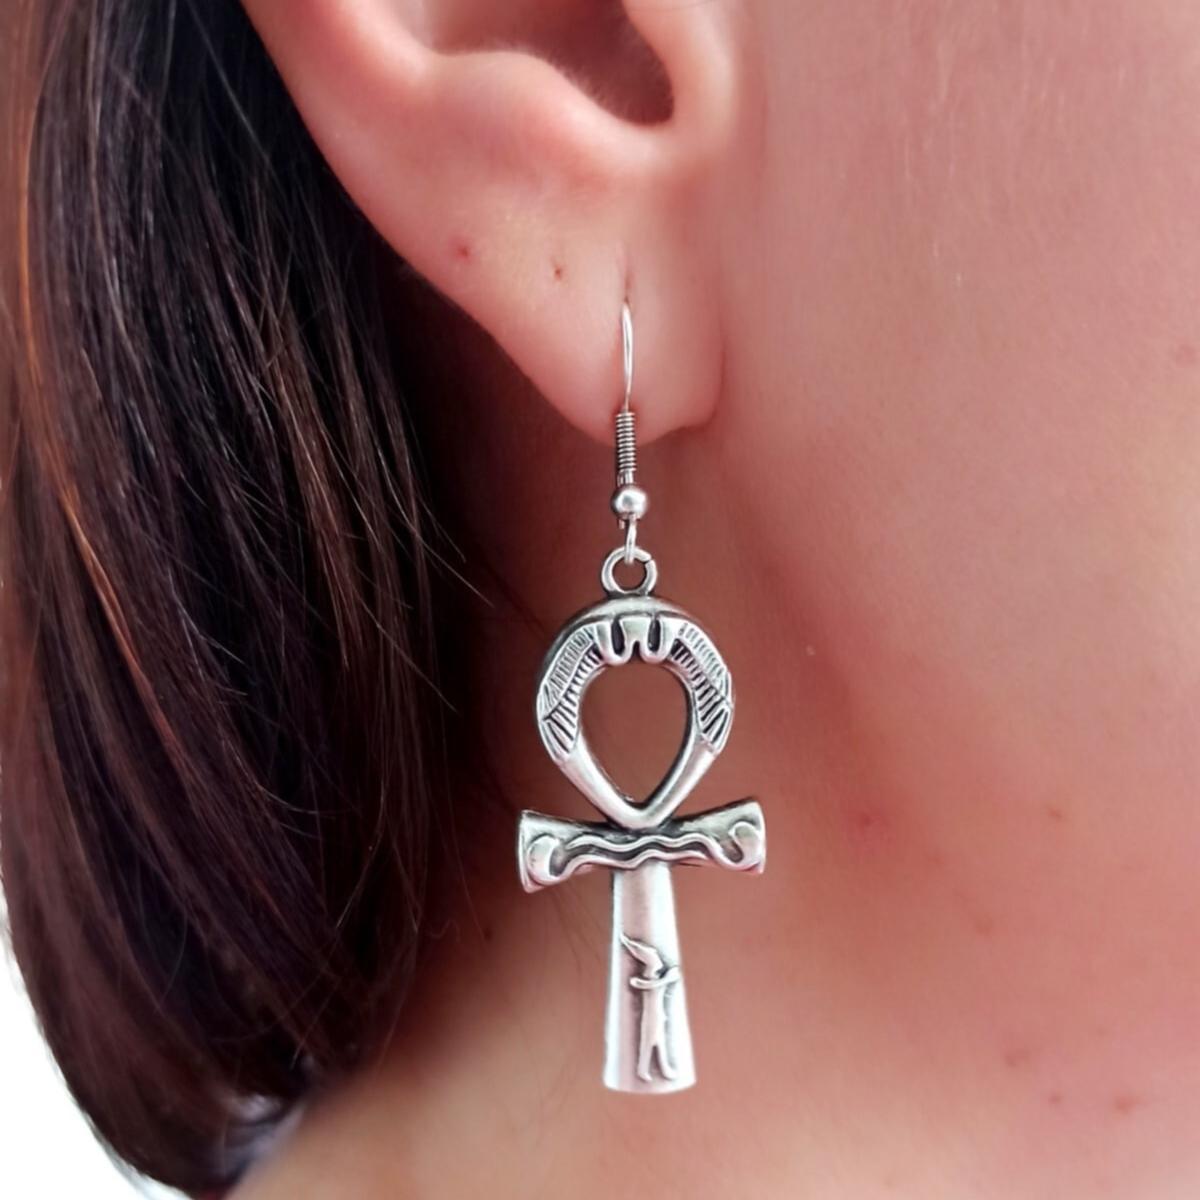 Ankh Cross Earrings • Ankh Dangle Earrings • Egyptian Ankh Earrings - Trending Silver Gifts